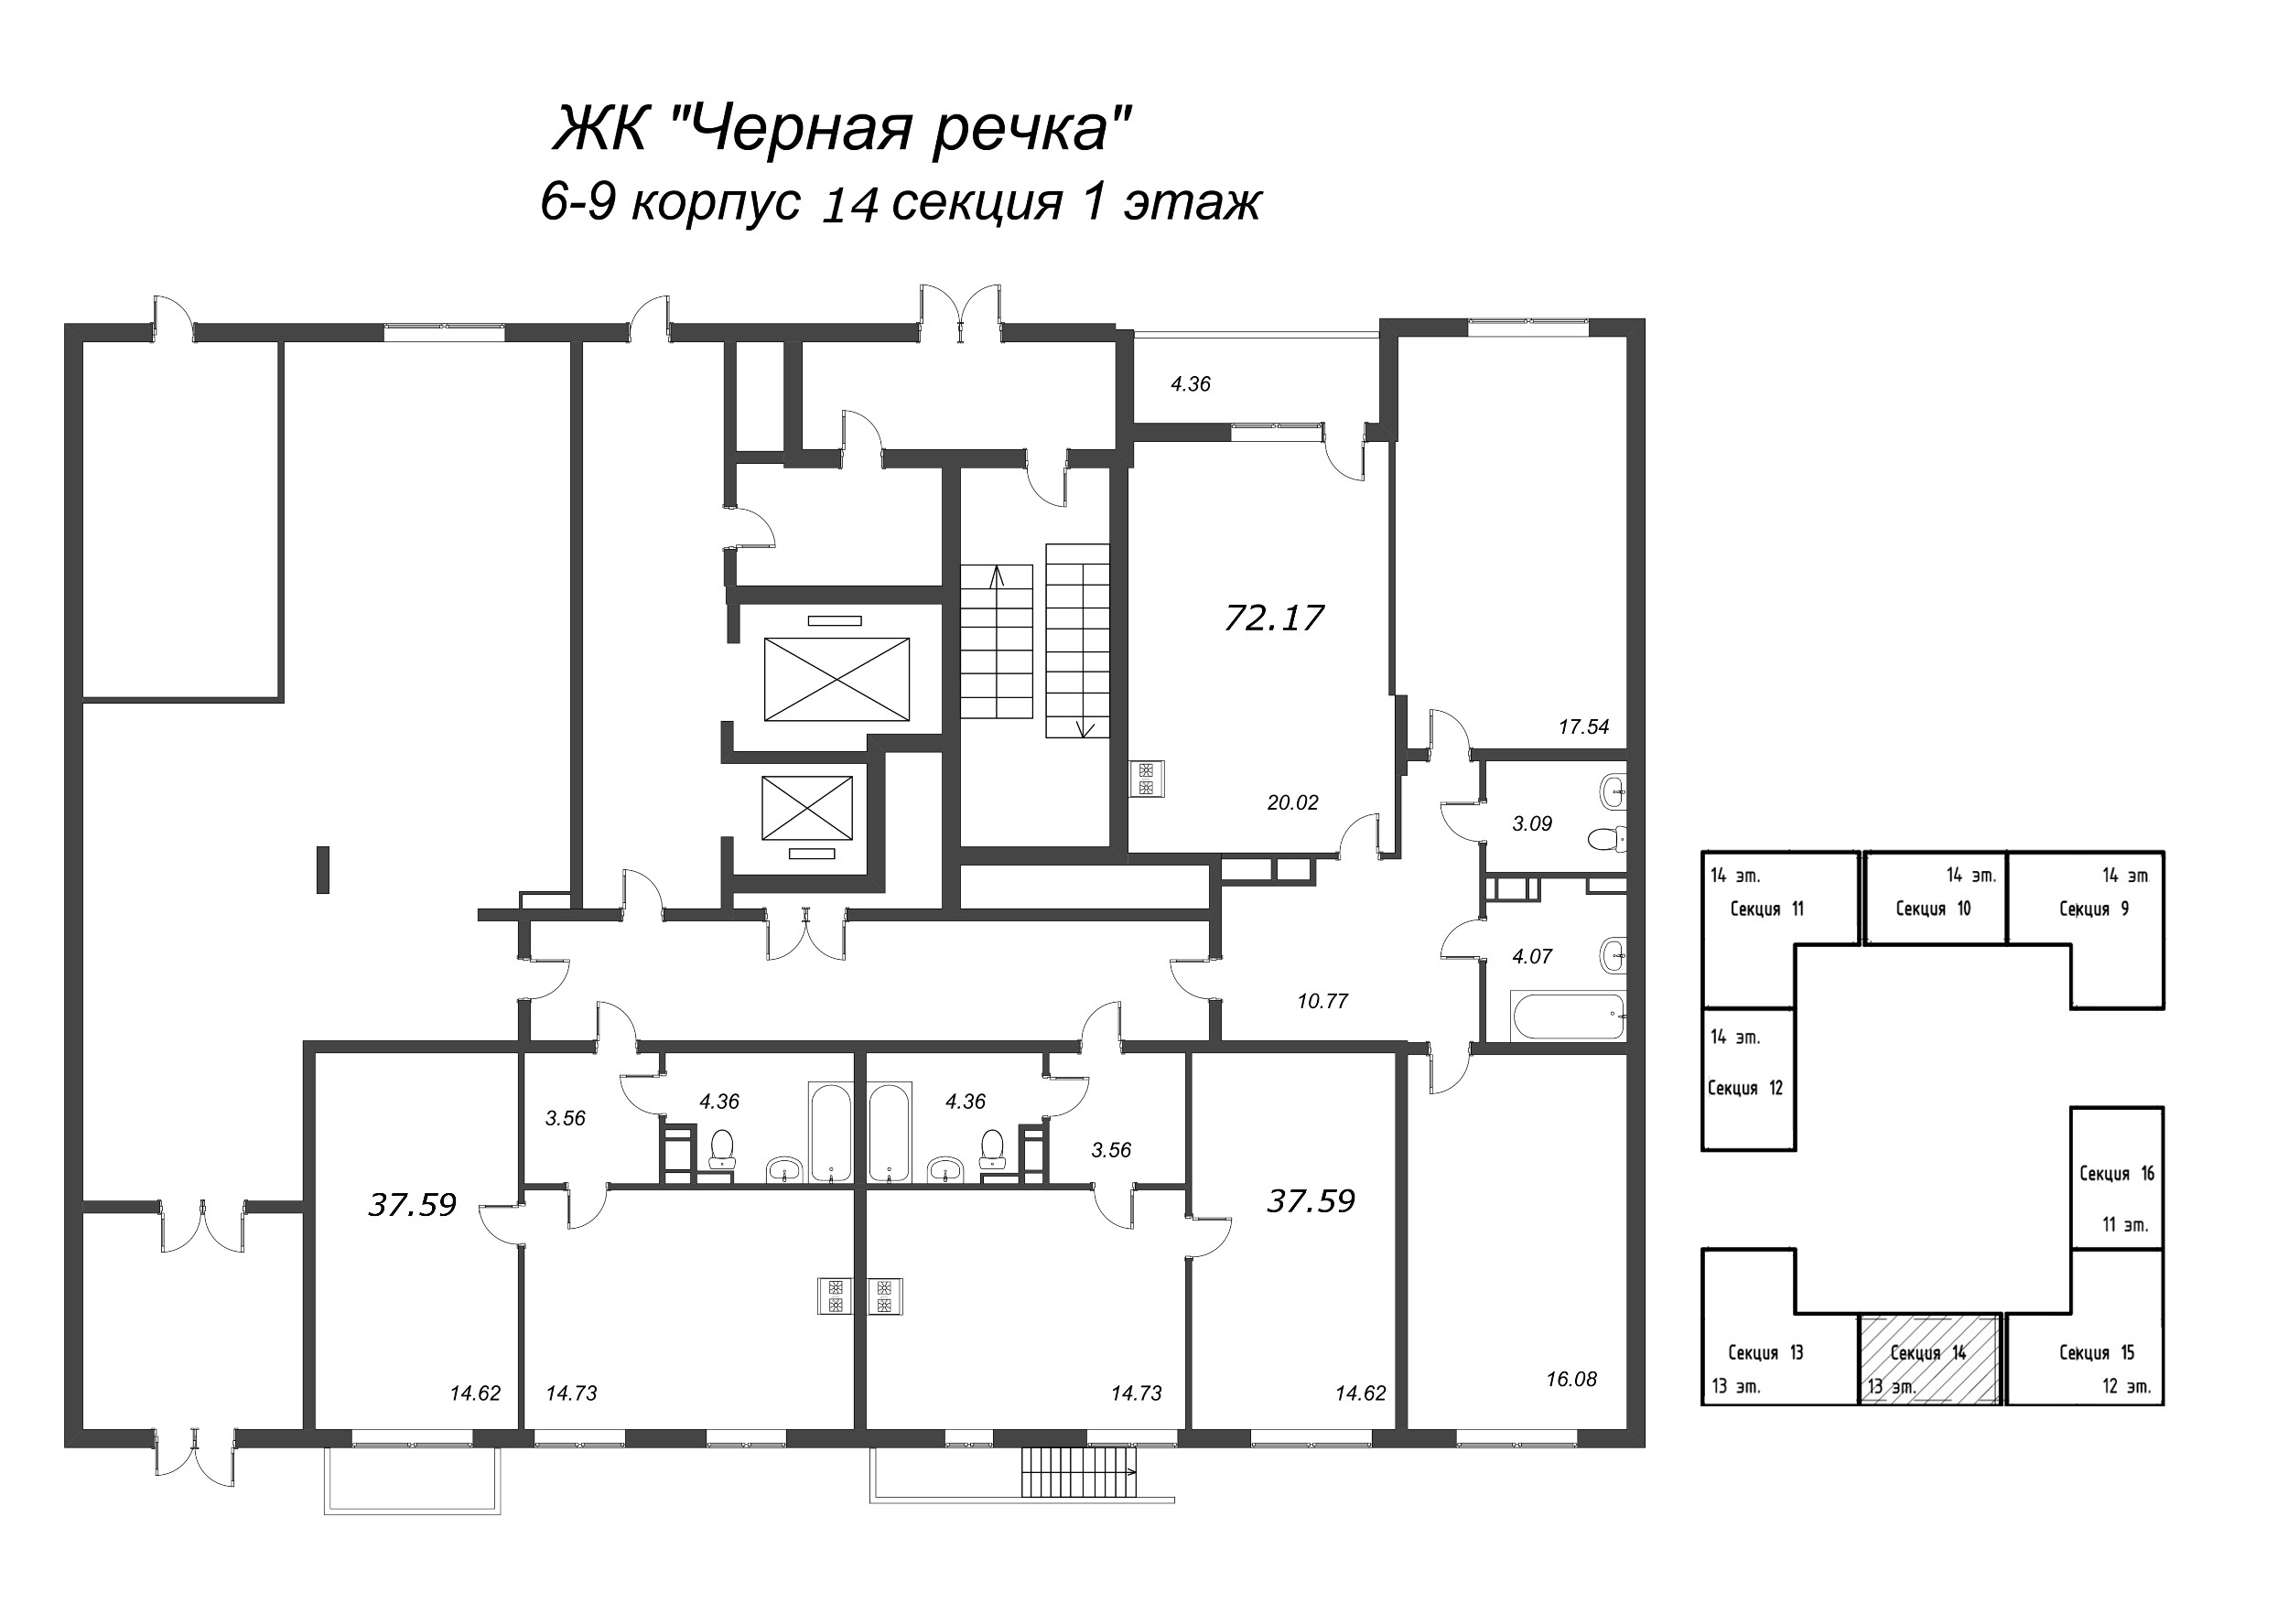 2-комнатная (Евро) квартира, 37.59 м² - планировка этажа